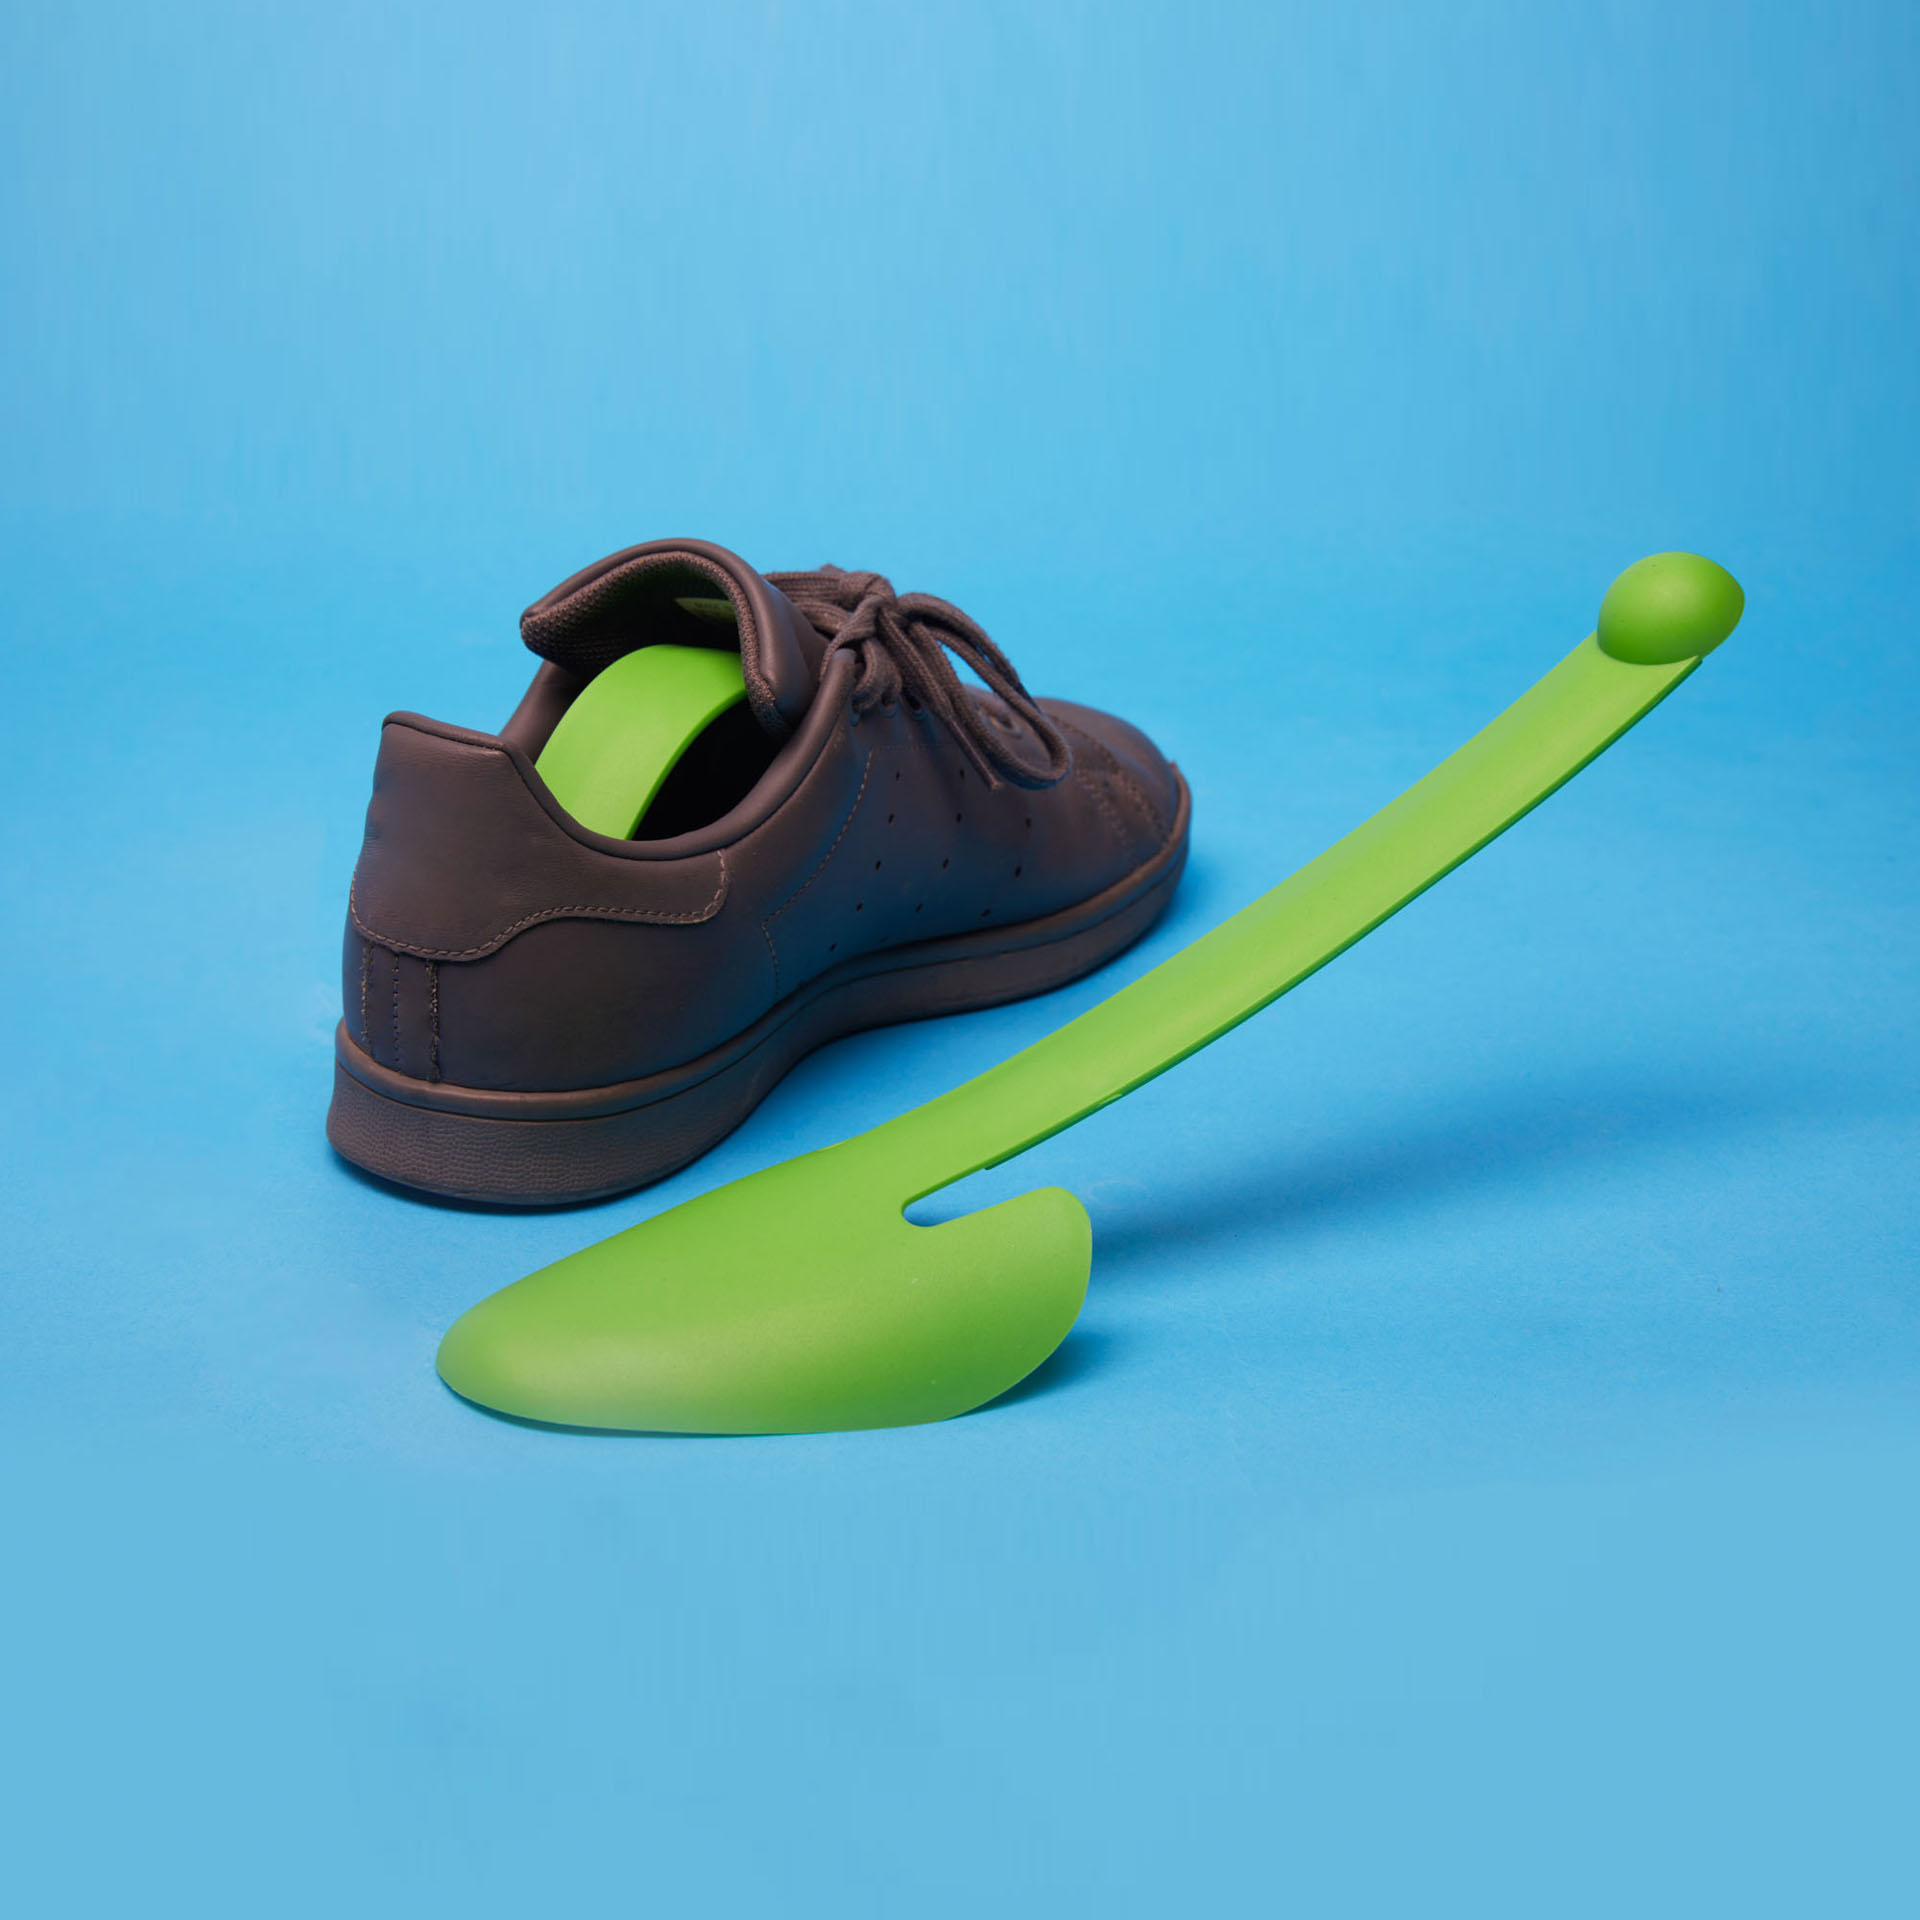 Forma per scarpe in plastica flessibile - Set da 2 pz, , large